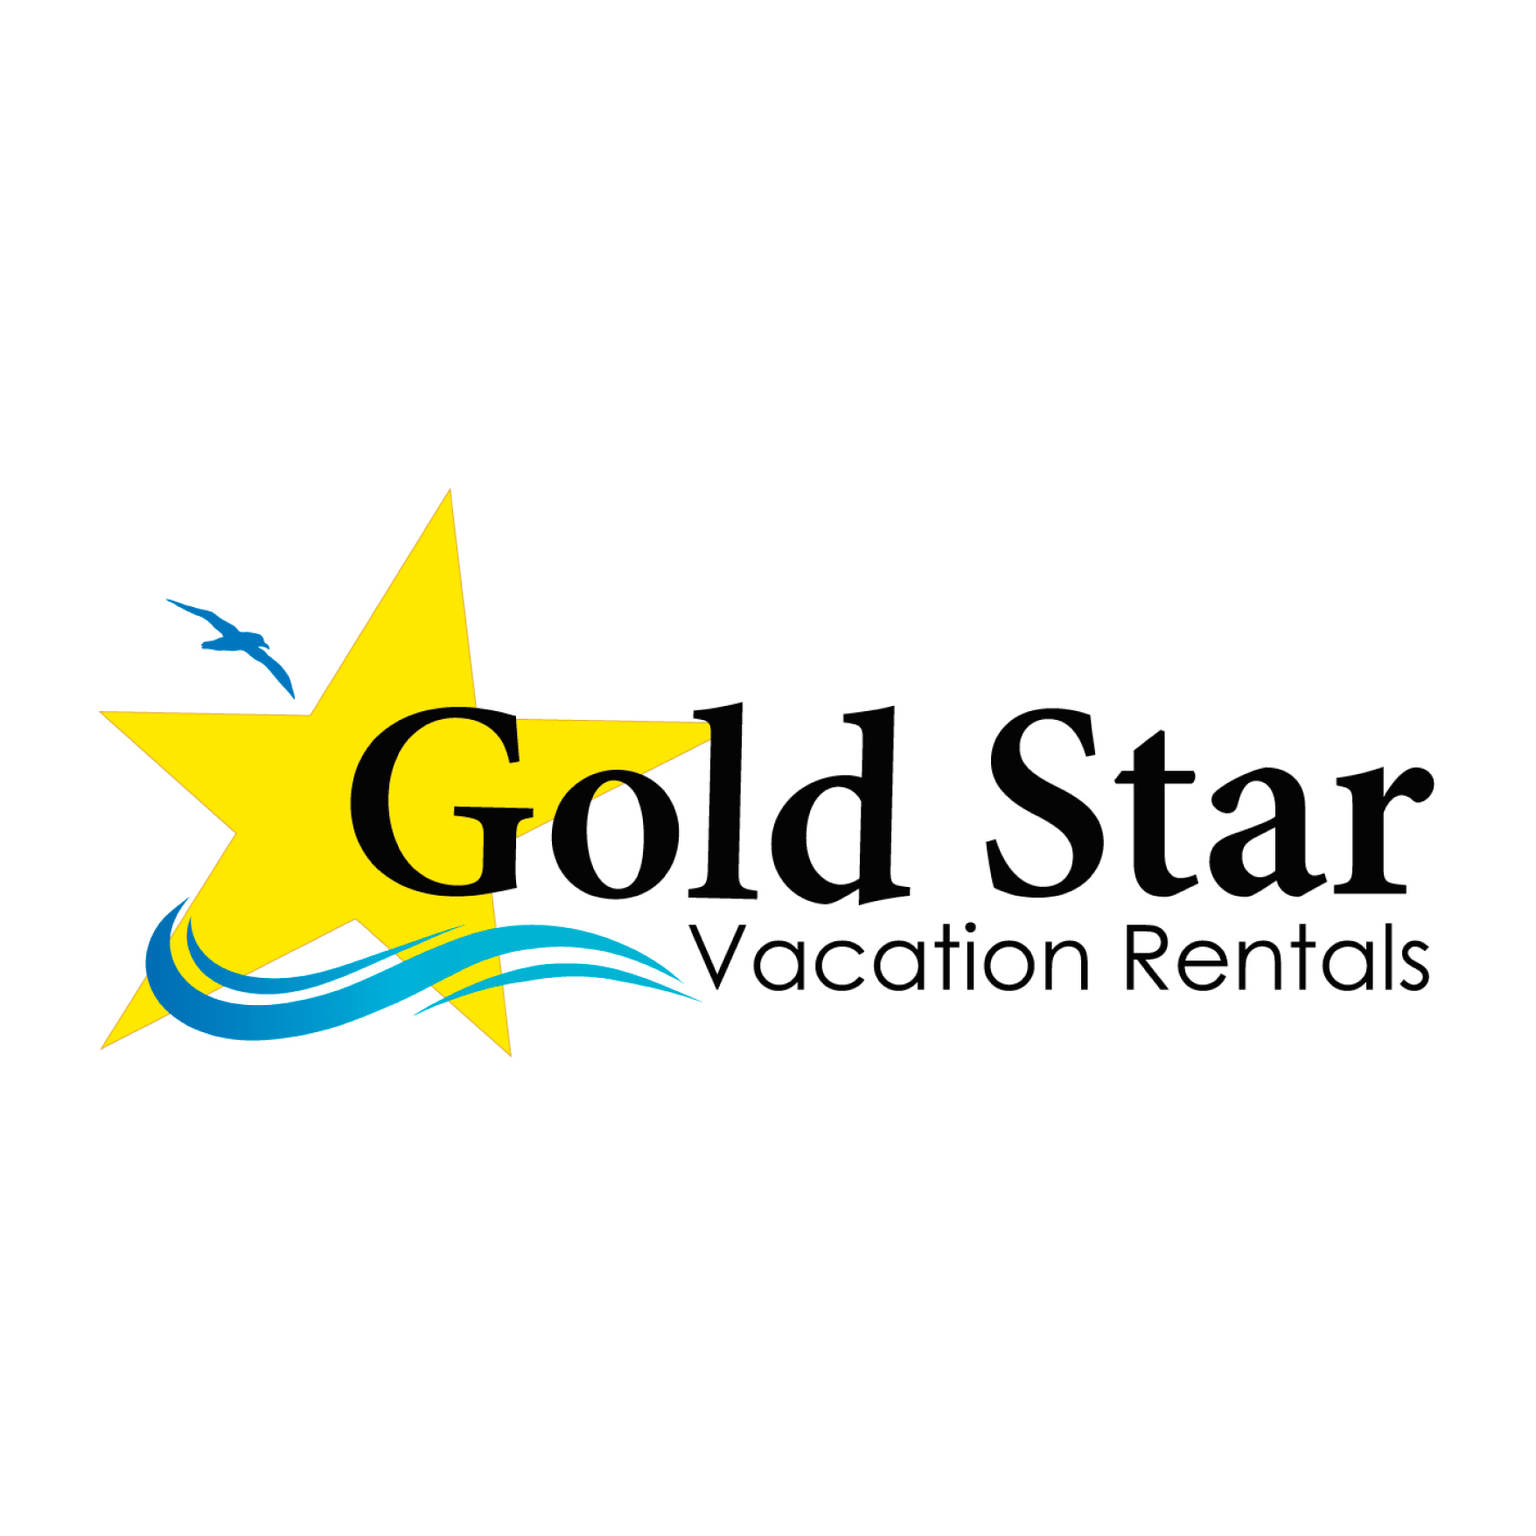 Gold Star Vacation Rentals